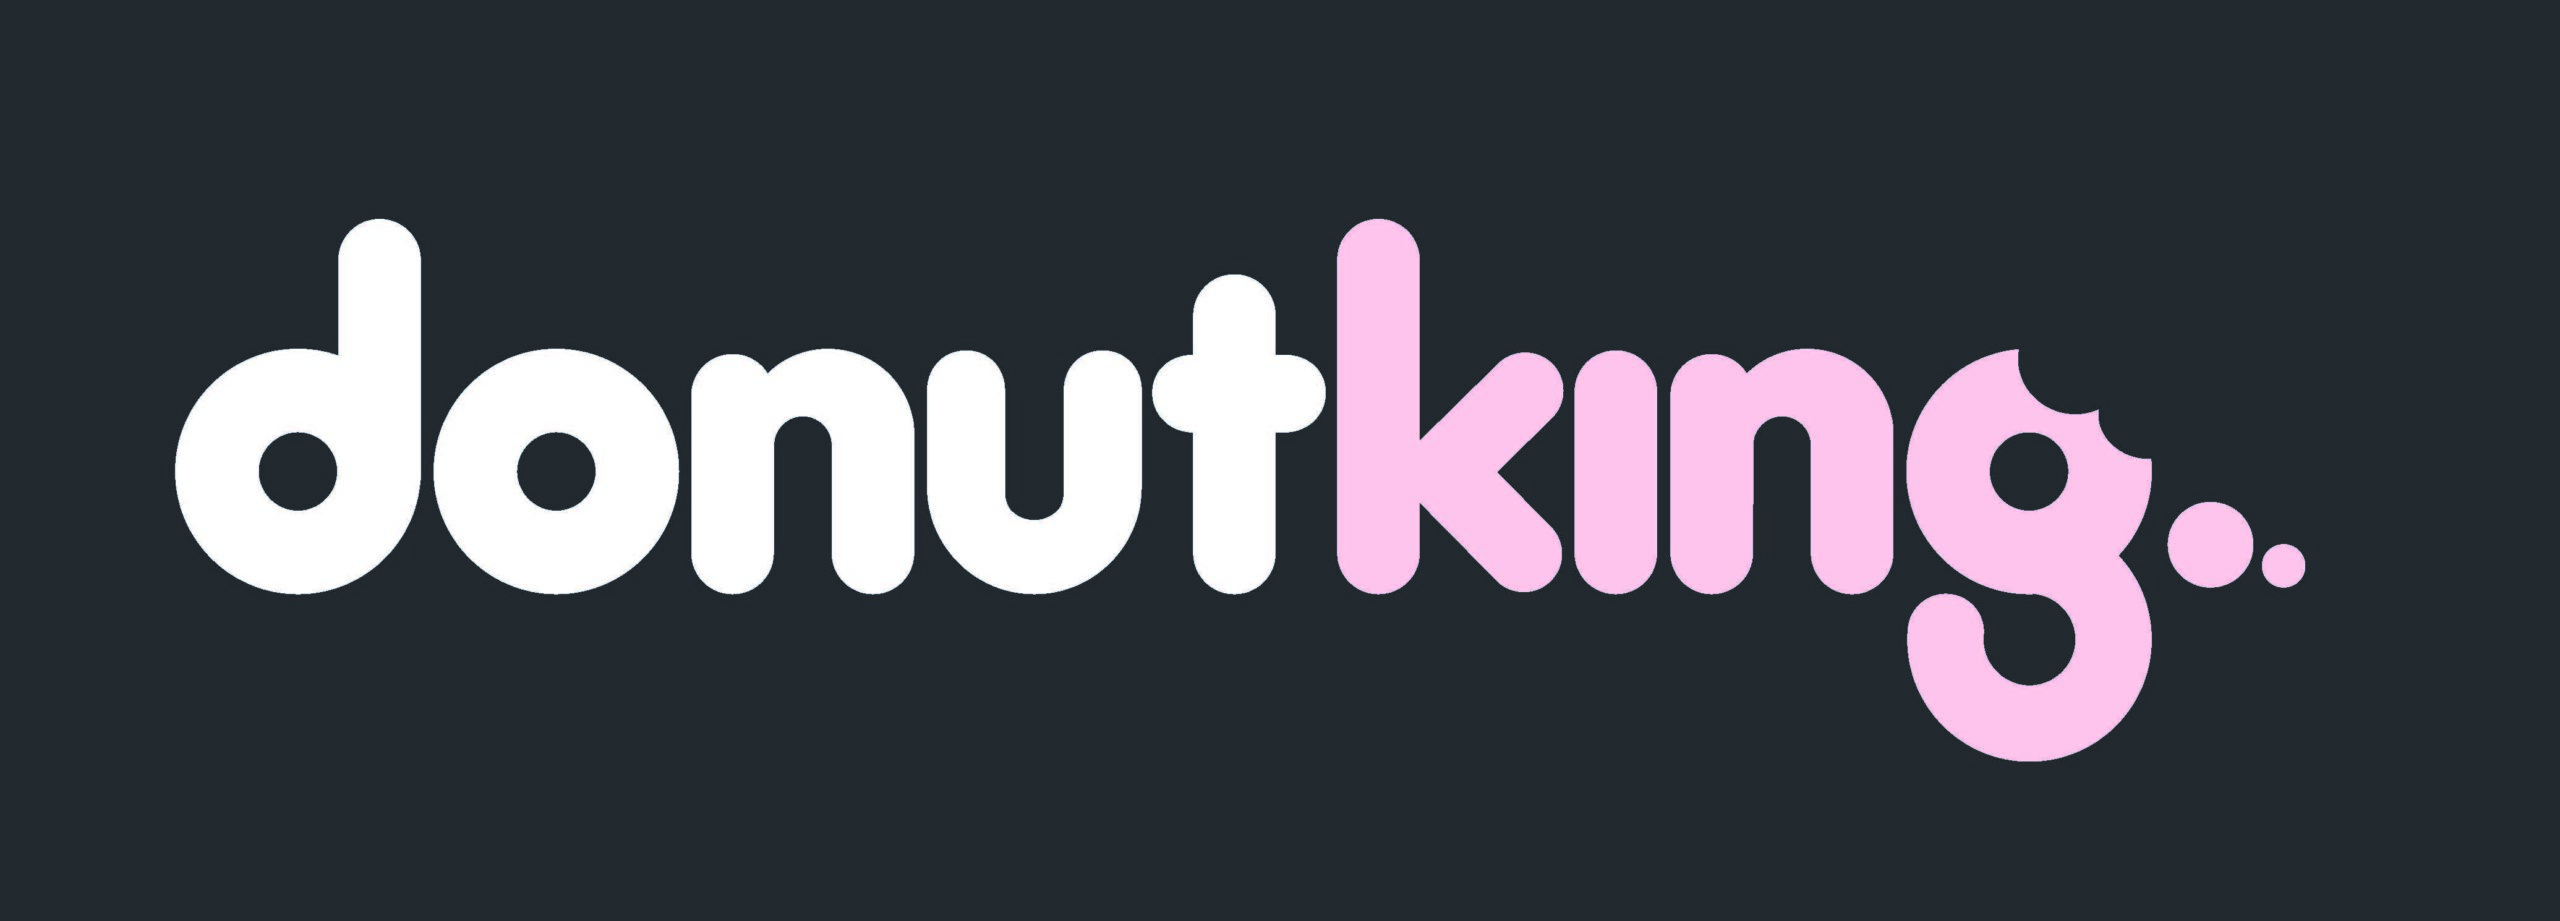 donut king logo